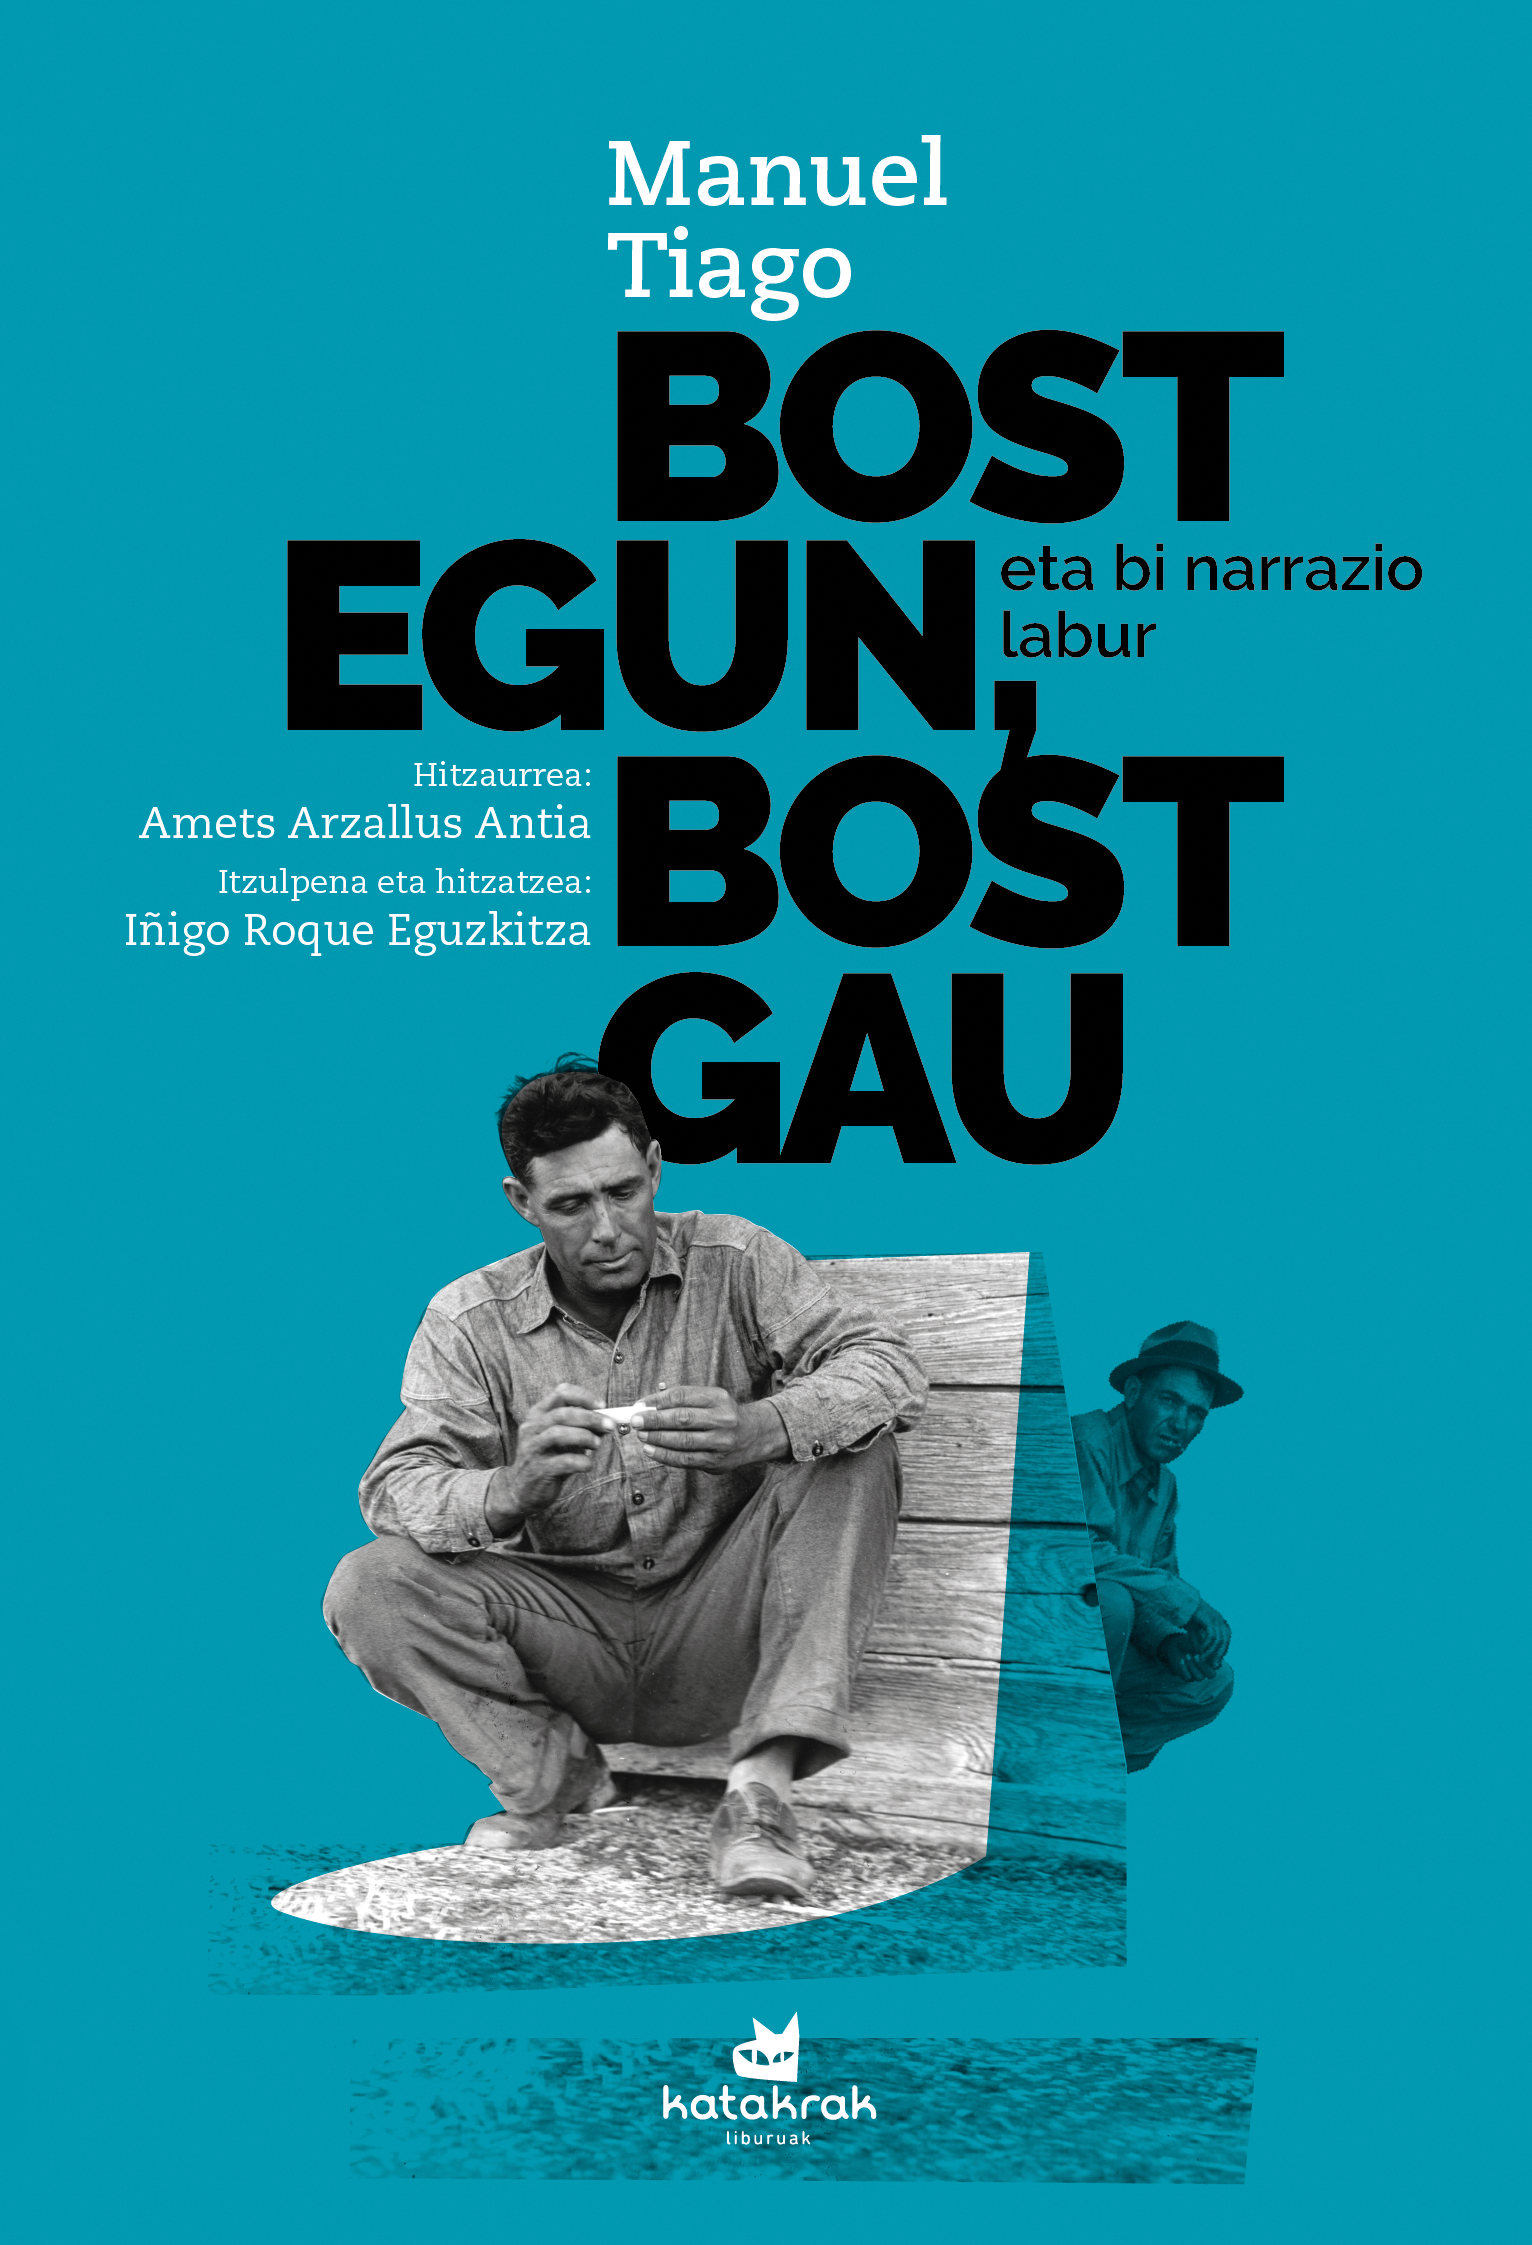 Manuel Tiago, Álvaro Barreirinhas Cunhal: Bost egun, bost gau (Paperback, Euskara language, 2020, Katakrak)